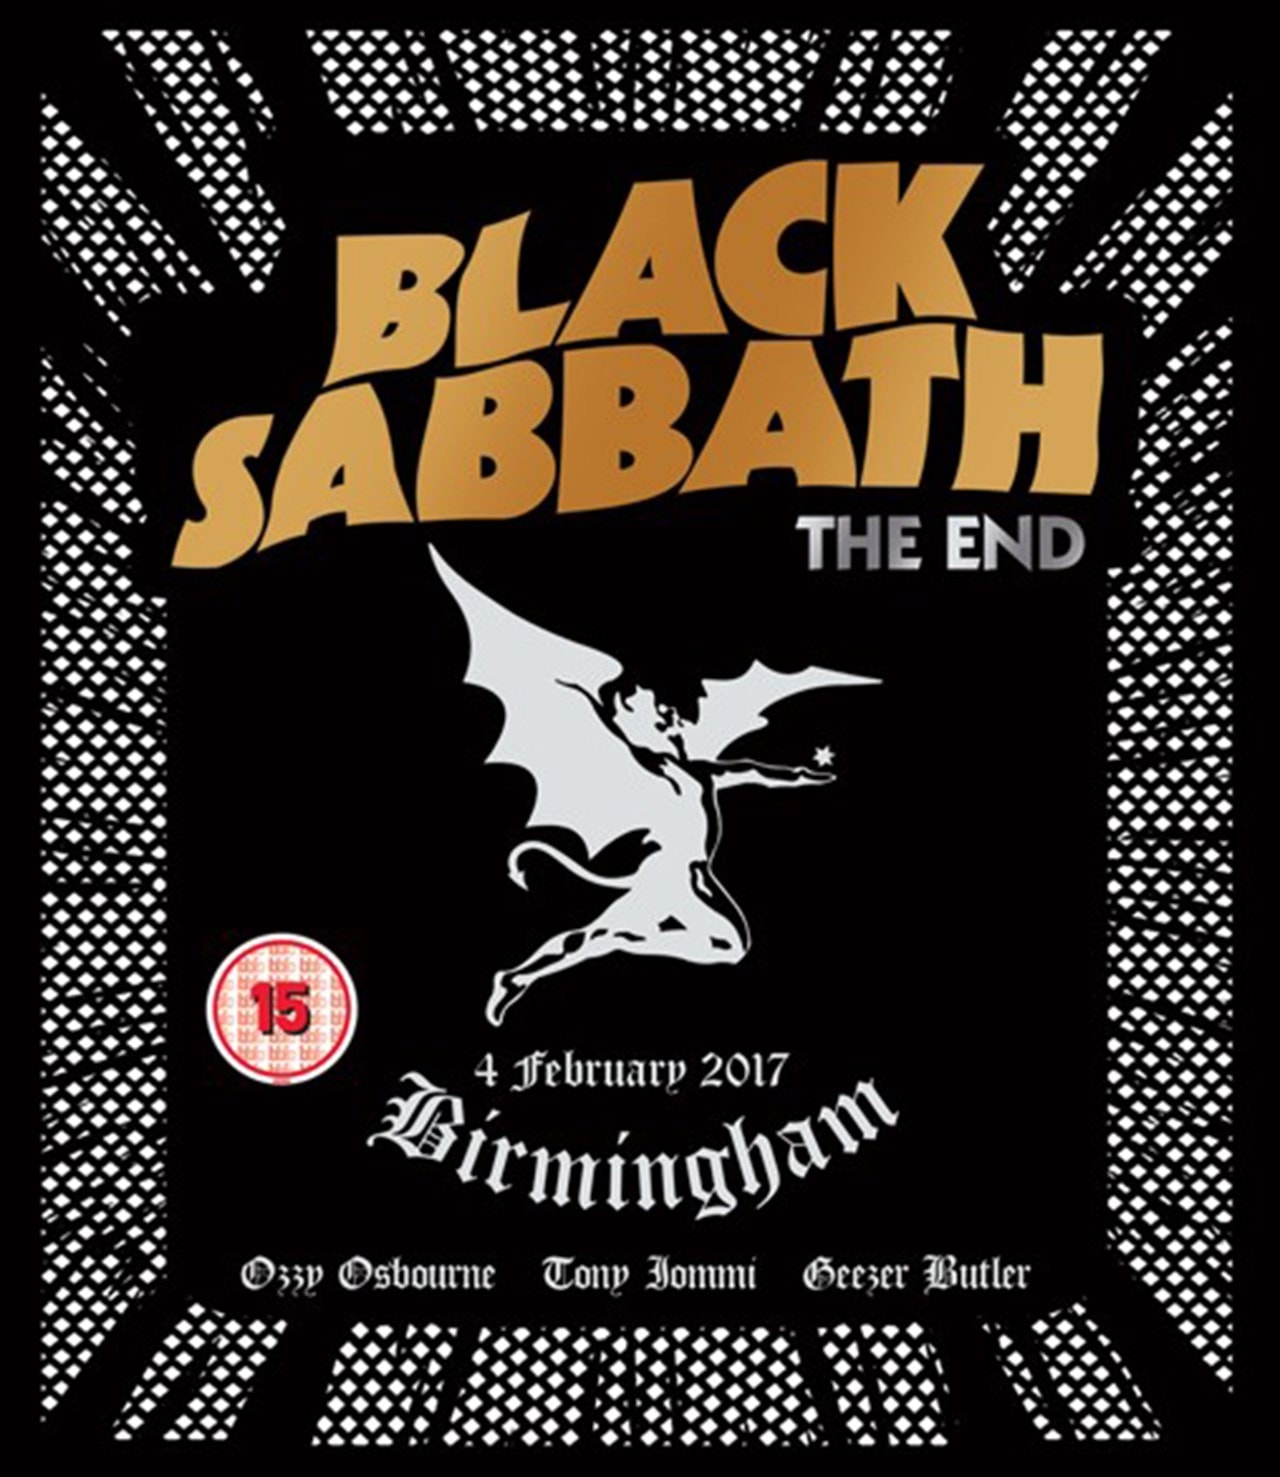 black sabbath the end tour dvd